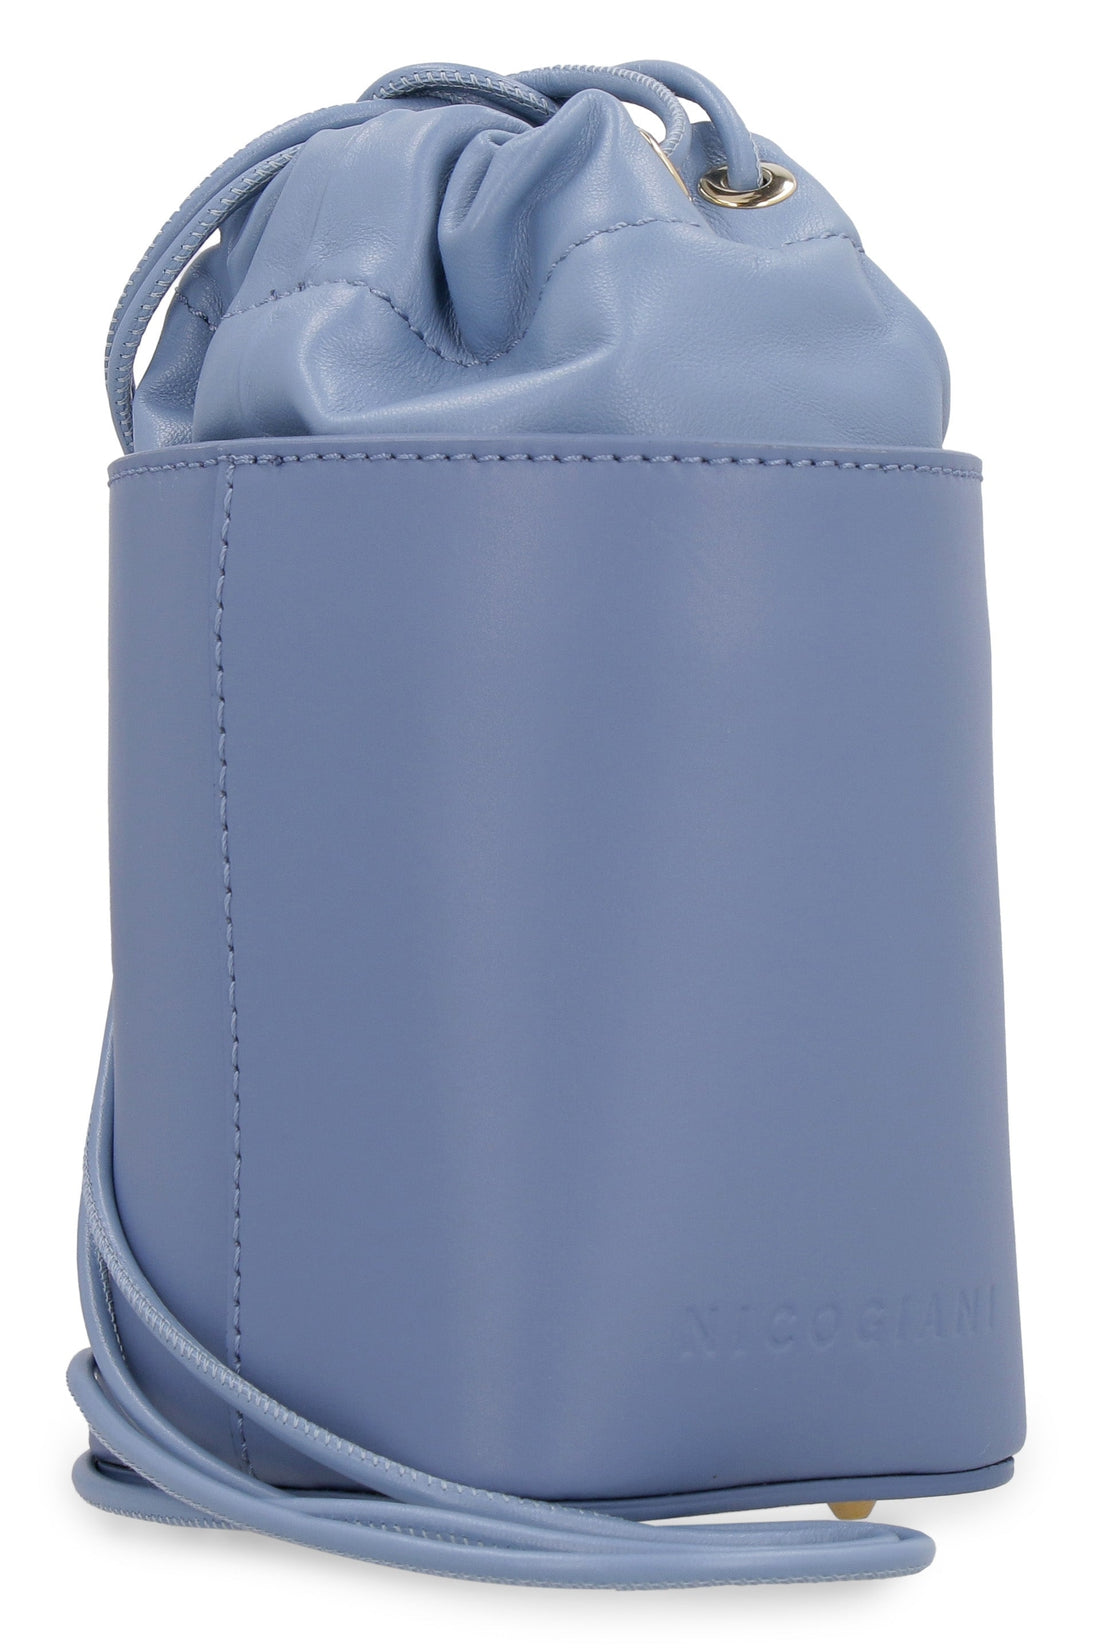 Nico Giani-OUTLET-SALE-Adenia mini leather bucket bag-ARCHIVIST